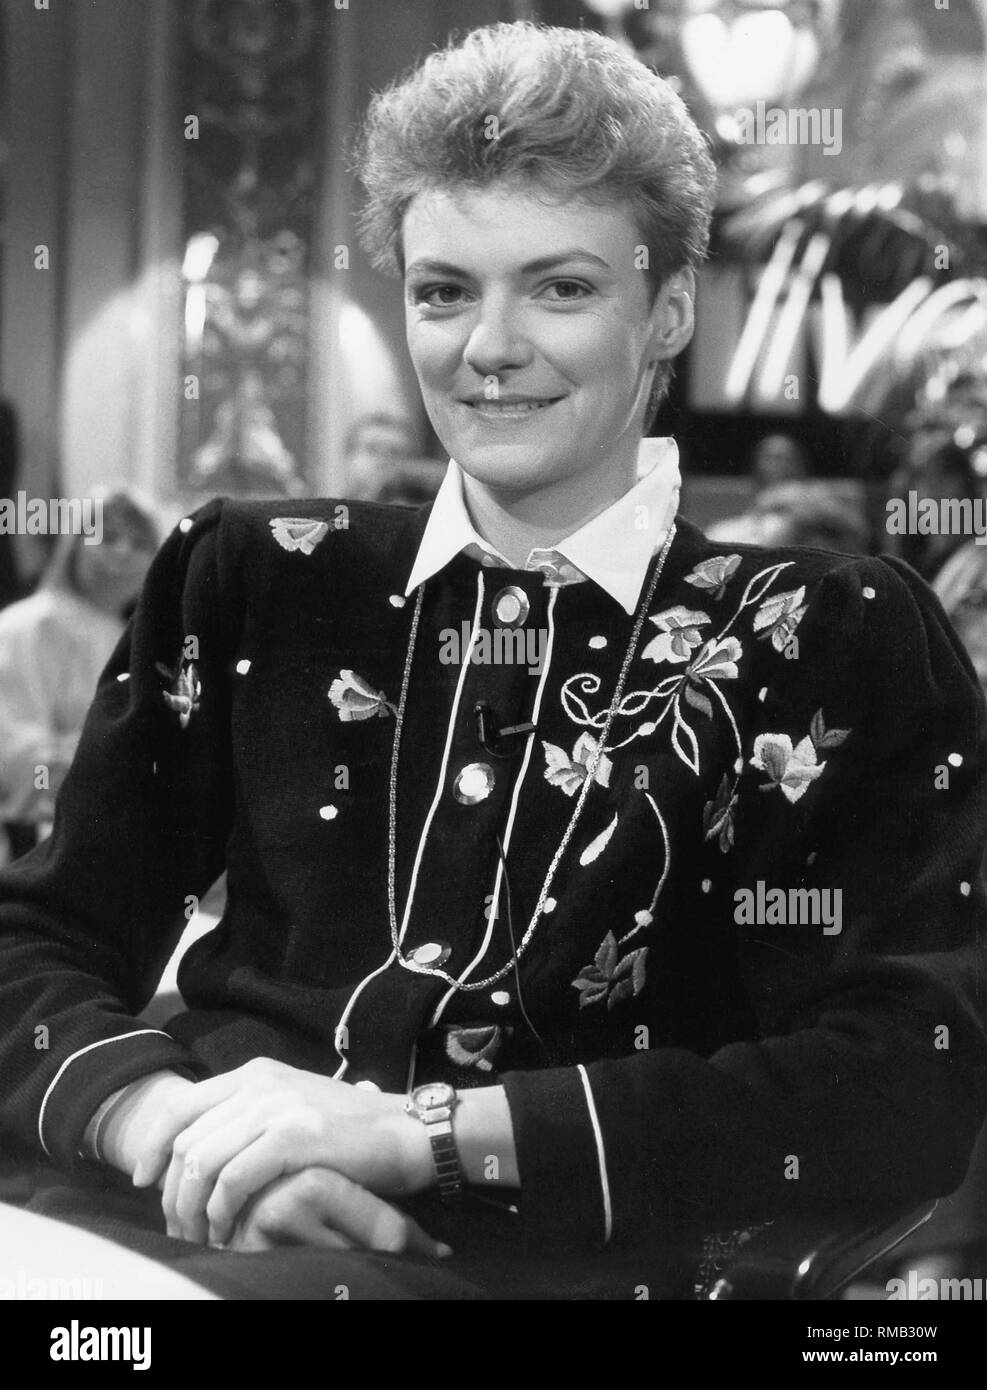 Monika Hohlmeier, daughter of Franz Josef Strauss, during her time as a municipal councilor in Vaterstaetten. Stock Photo